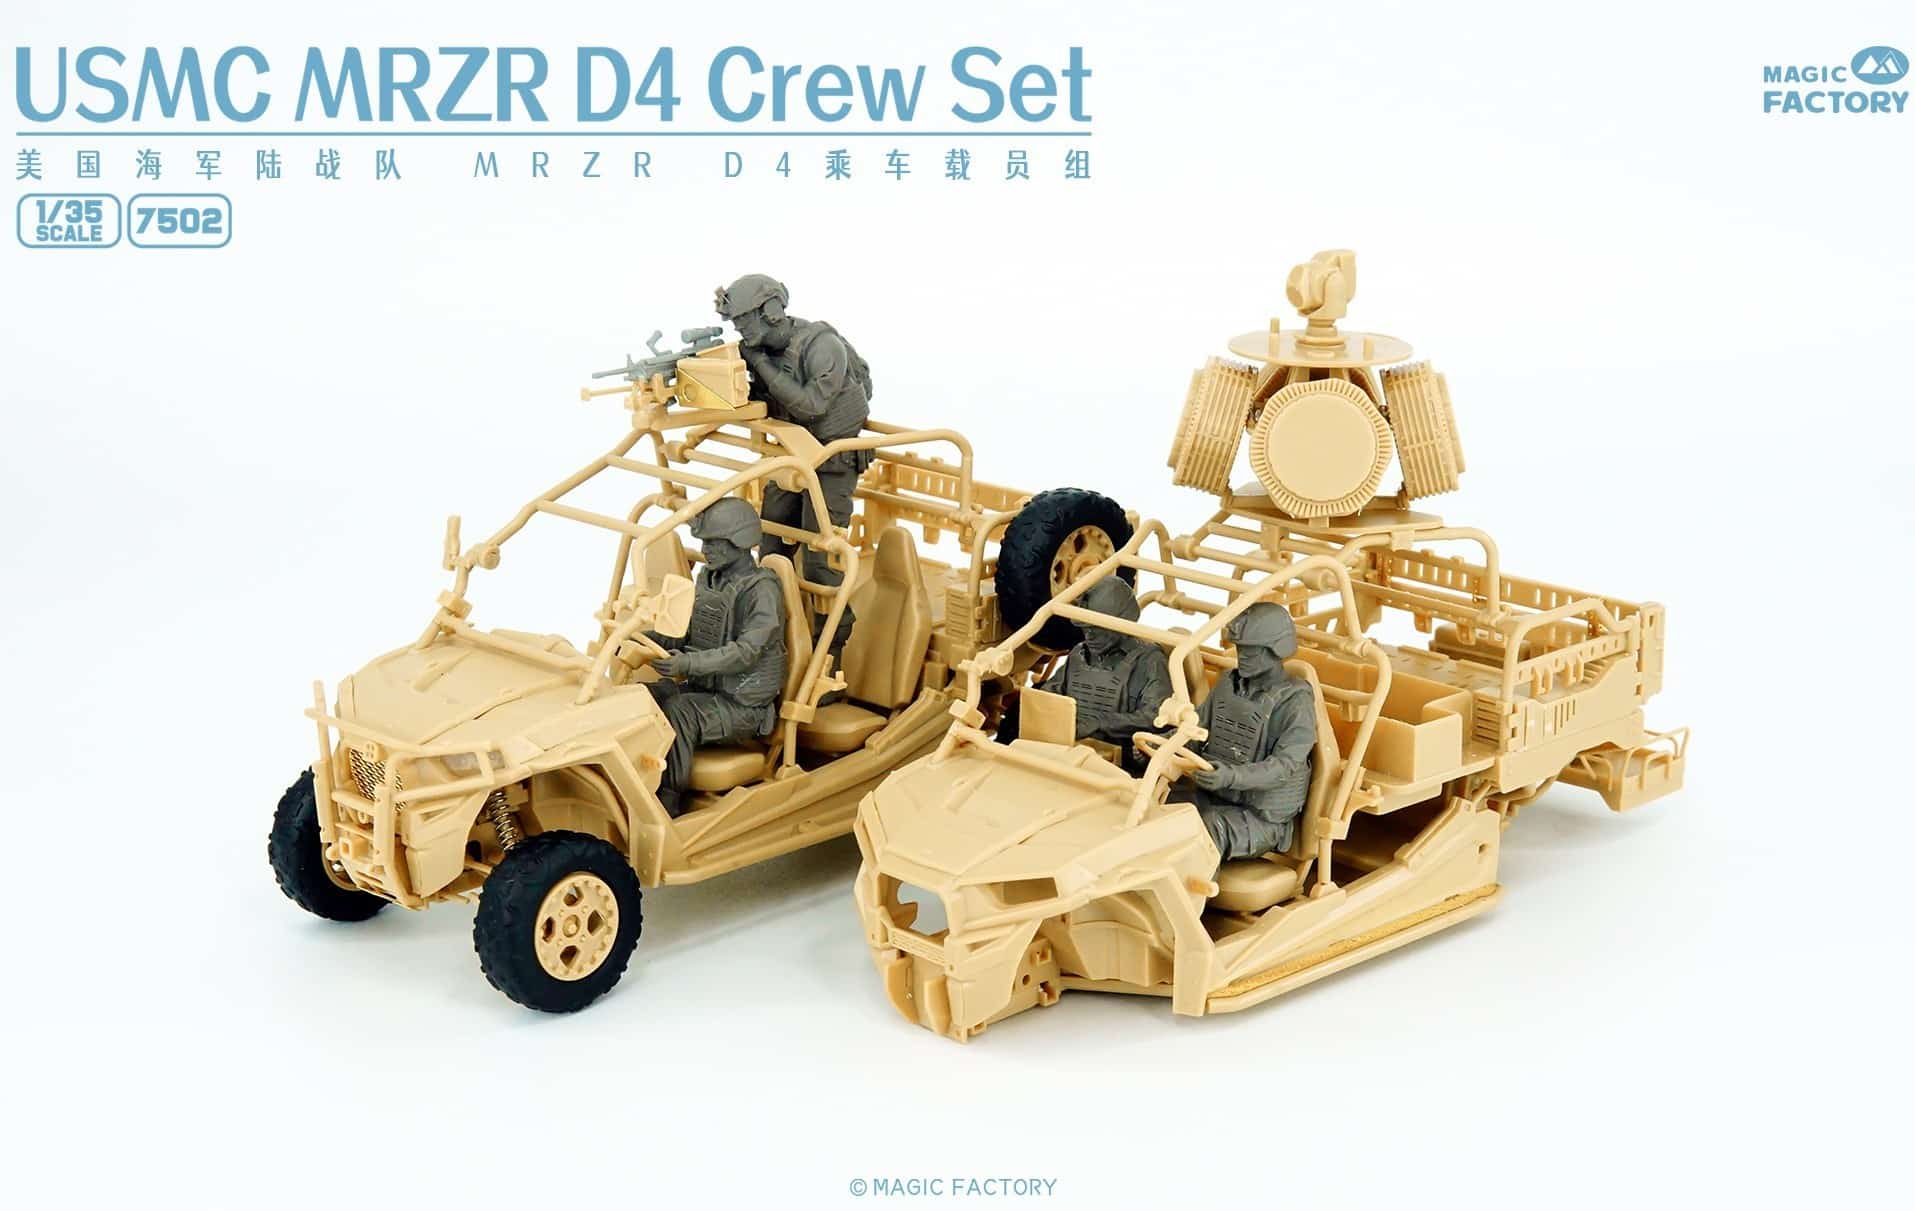 New USMC MRZR D4 Crew Set Available from Magic Factory